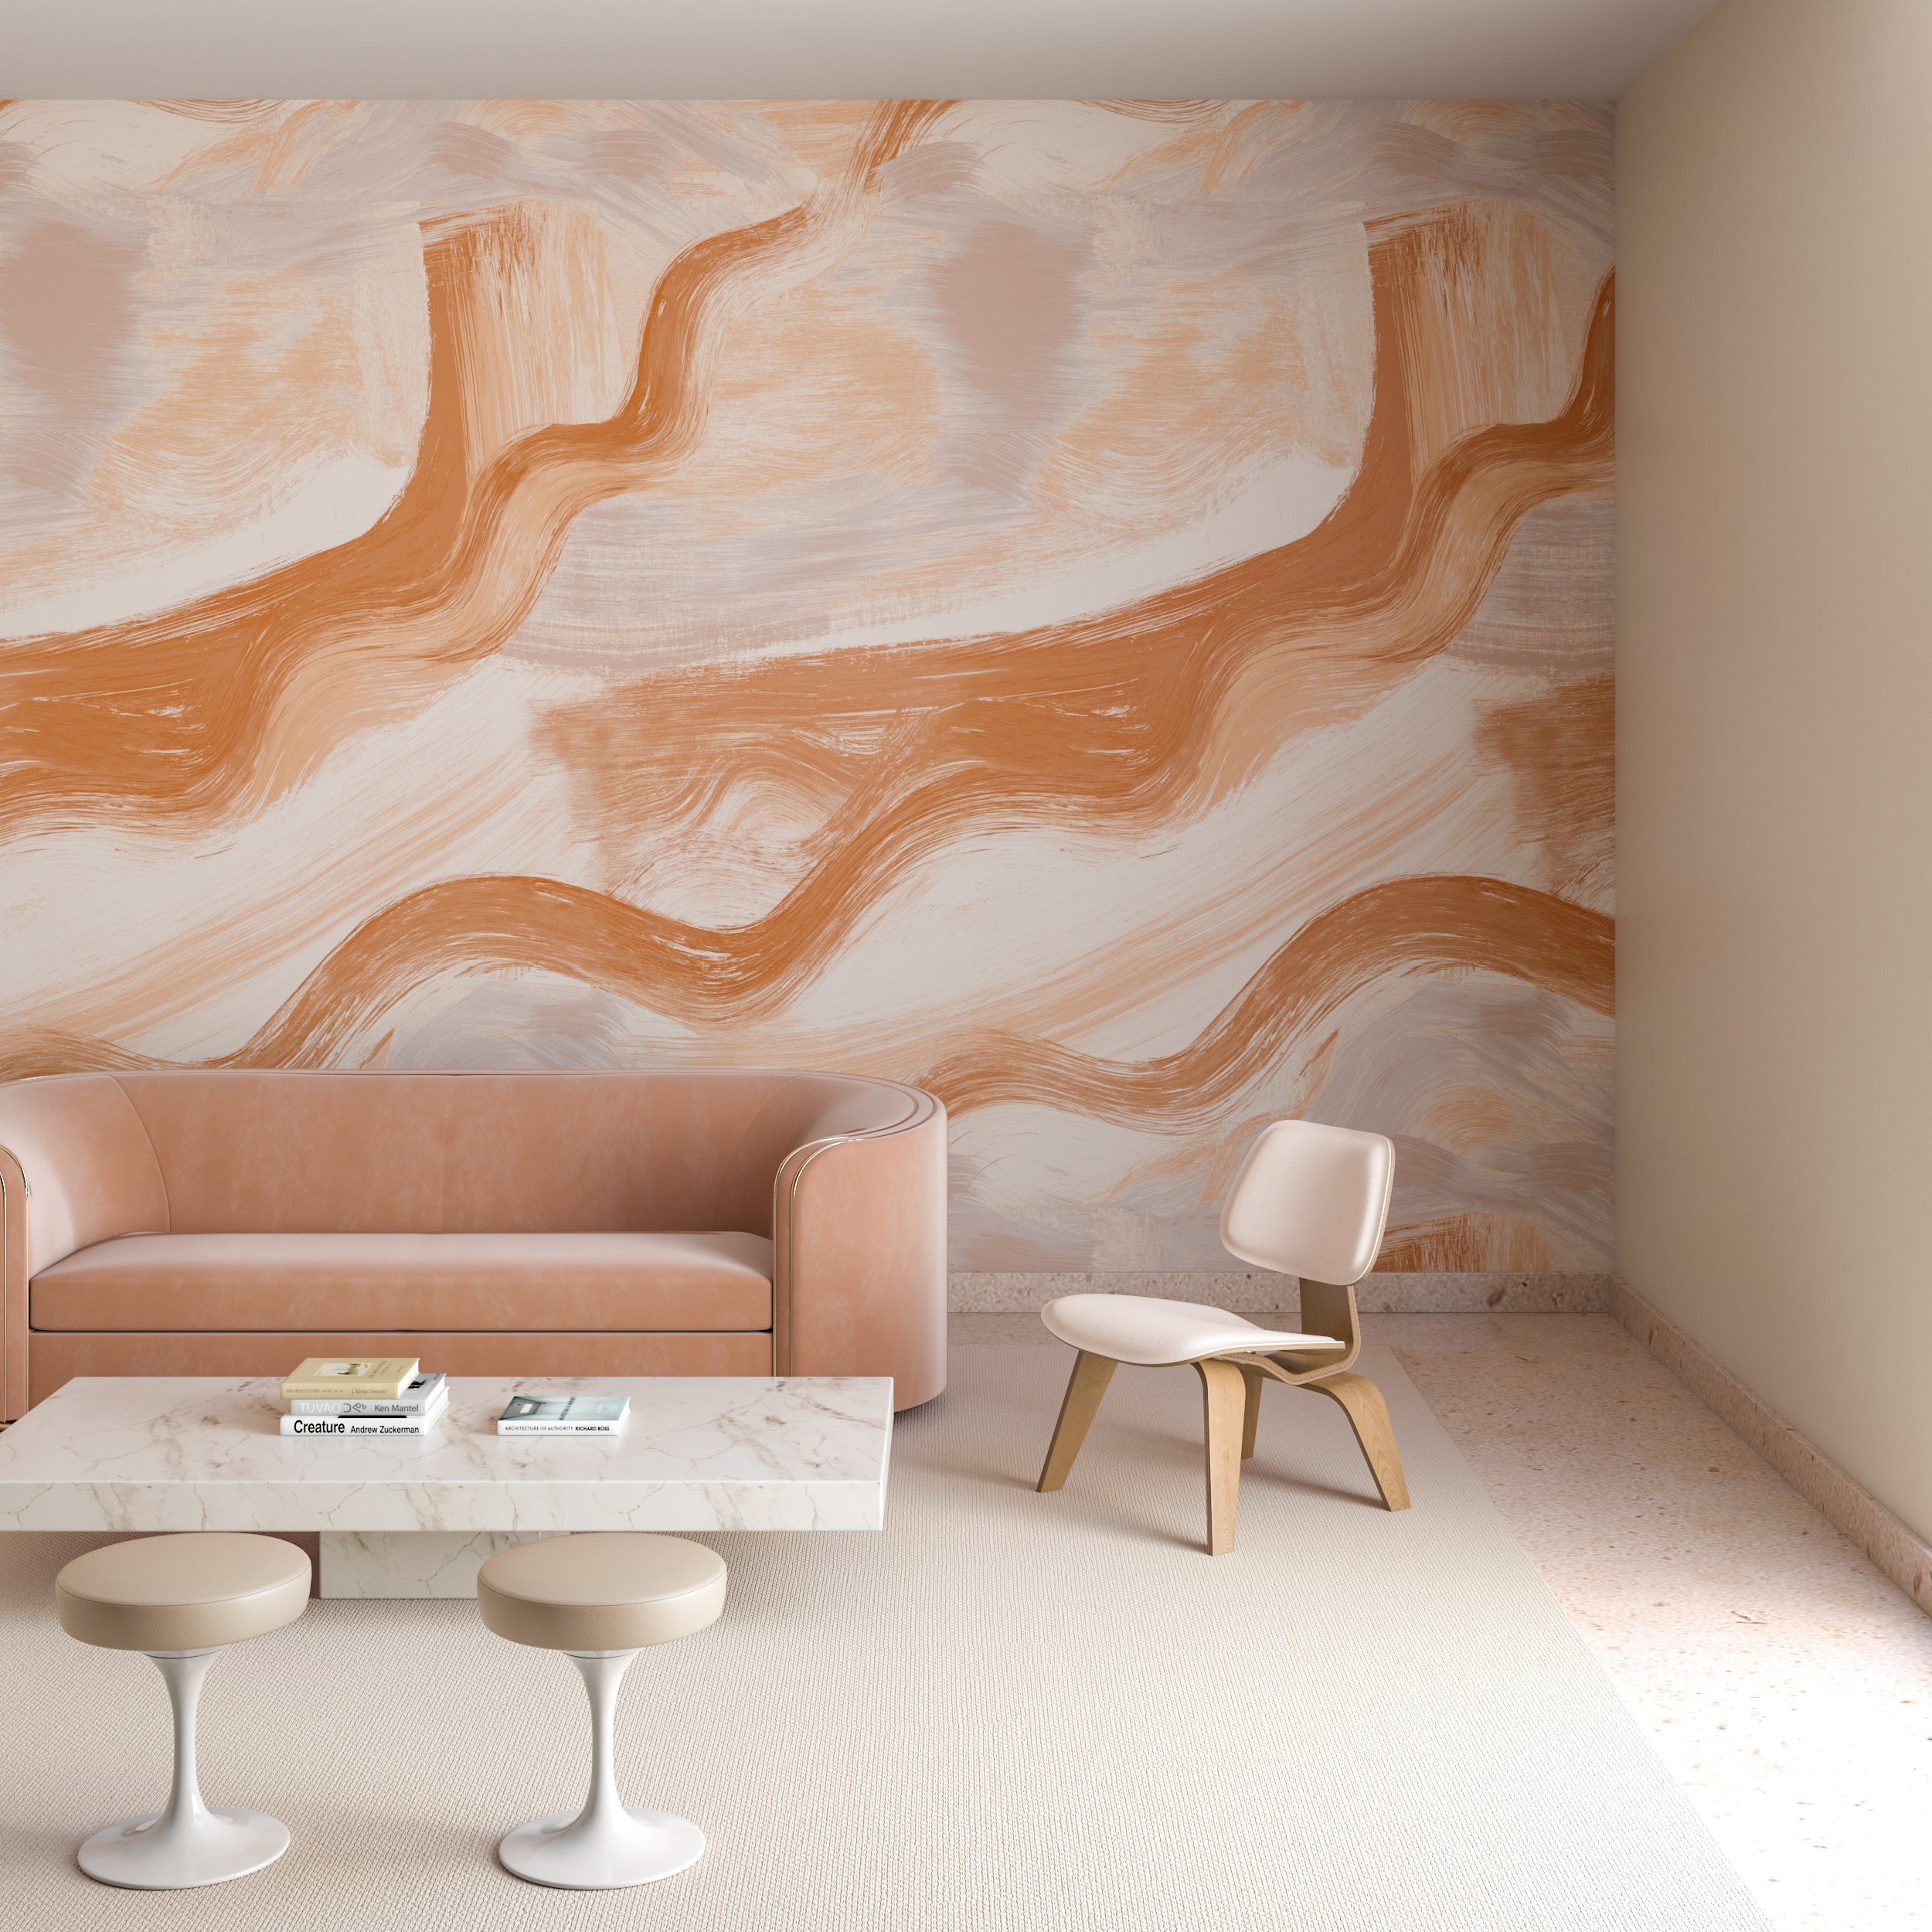 Drop it MODERN on Instagram OCEANIC Mural Wallpaper in Agate     dropitmodern wallpaper design interiordesign  homedecor paintedwallpaper